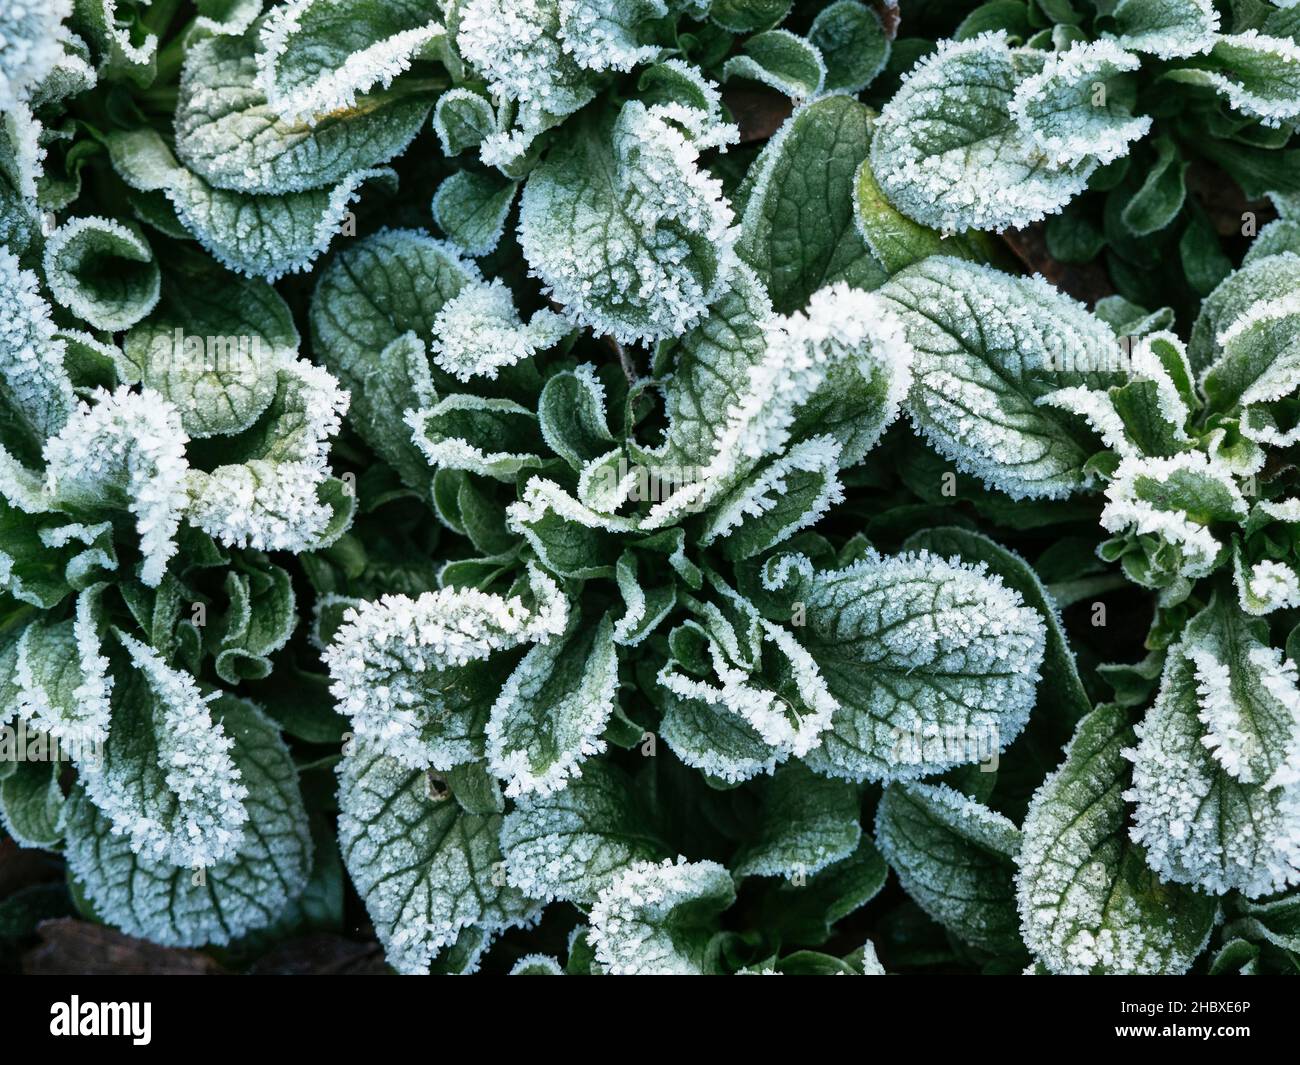 Corn salad (Valerianella locusta) with frost in December. Stock Photo